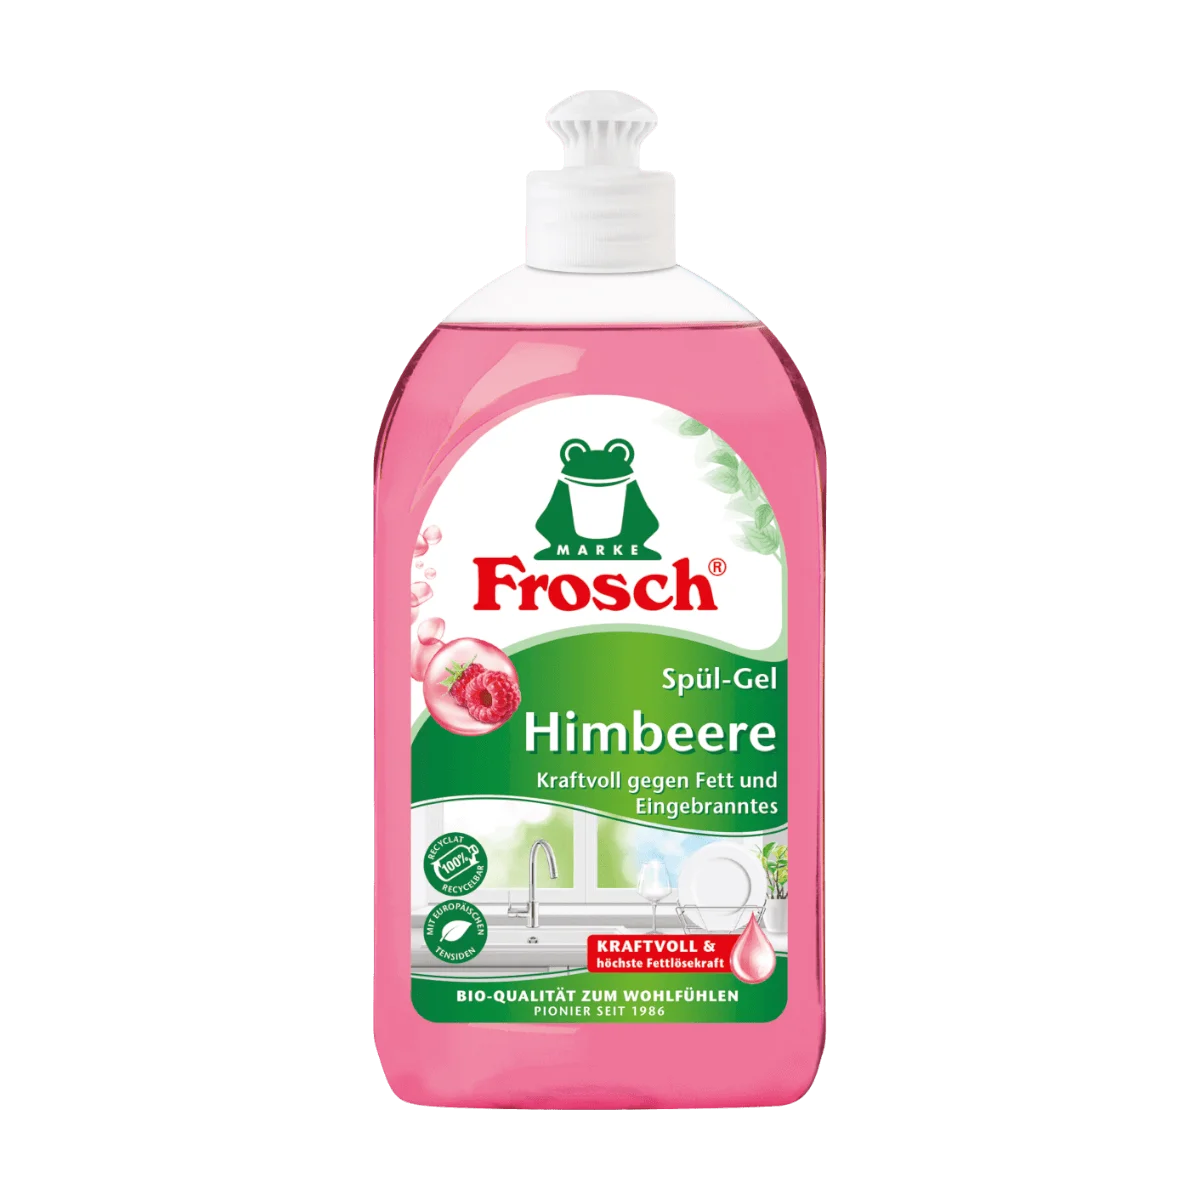 Frosch Himbeer Spül-Gel, 500 ml